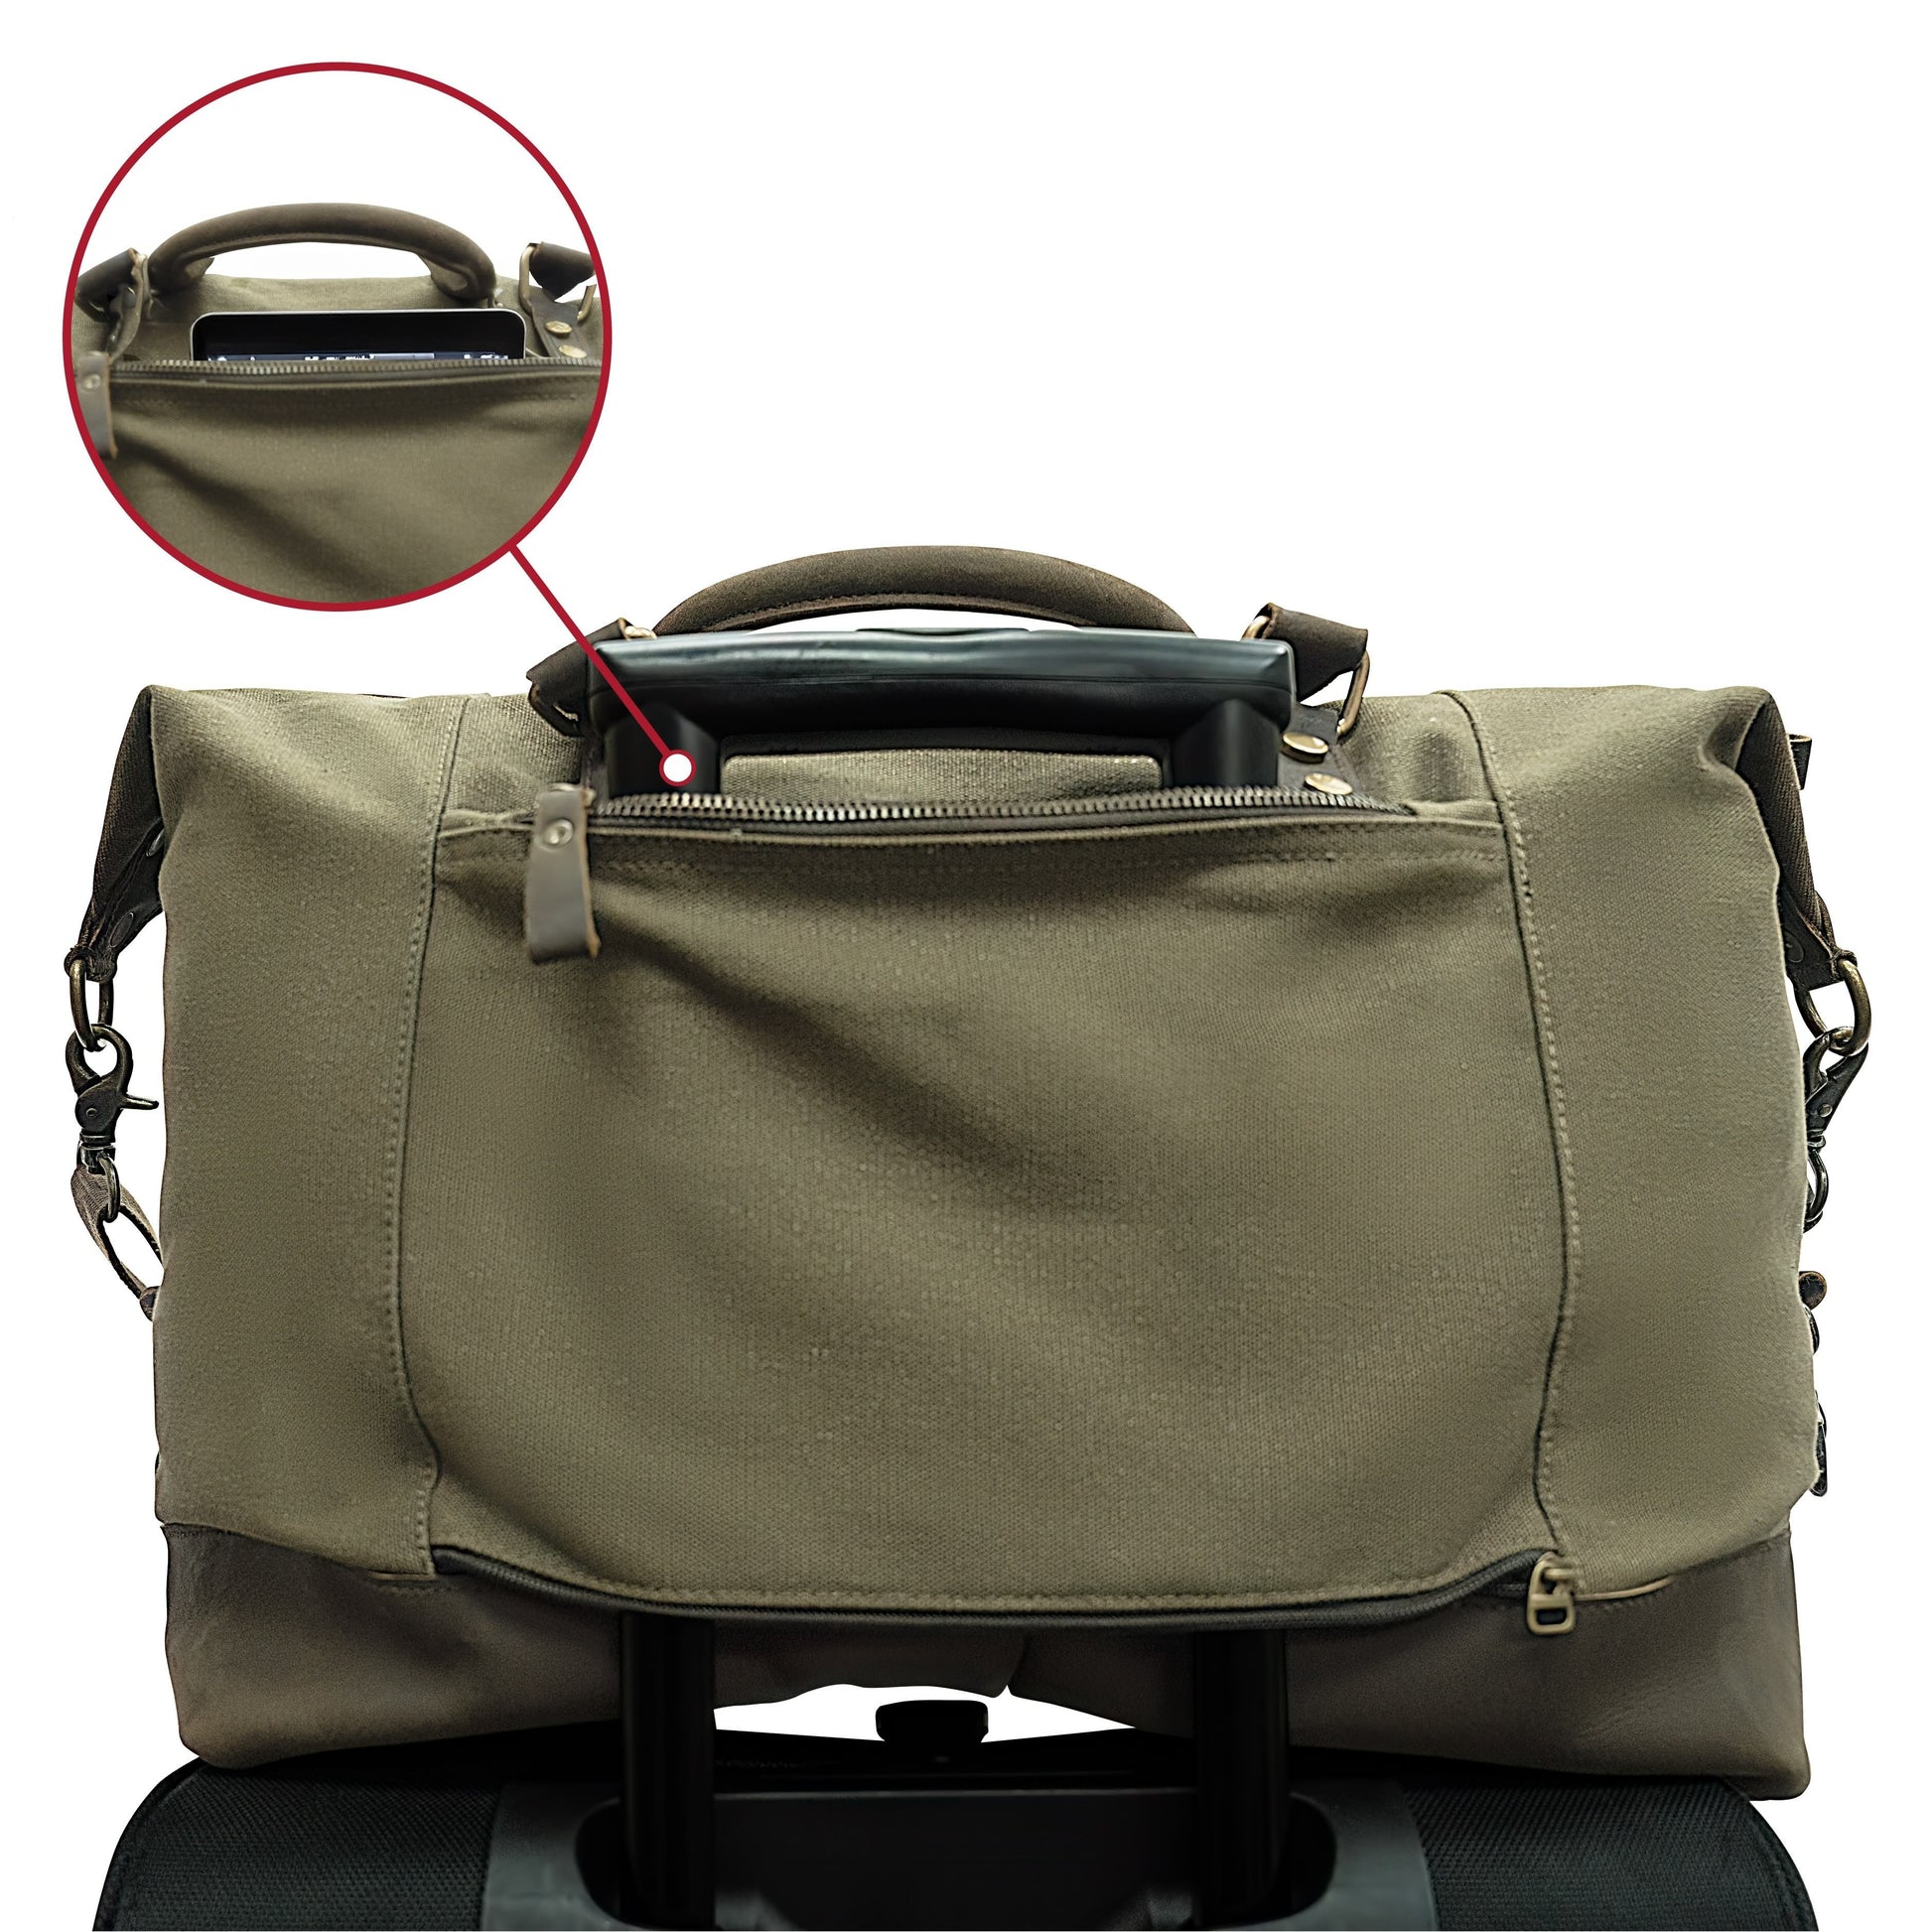 Duffel Bags - Rothco Vintage Carry On Travel Bag